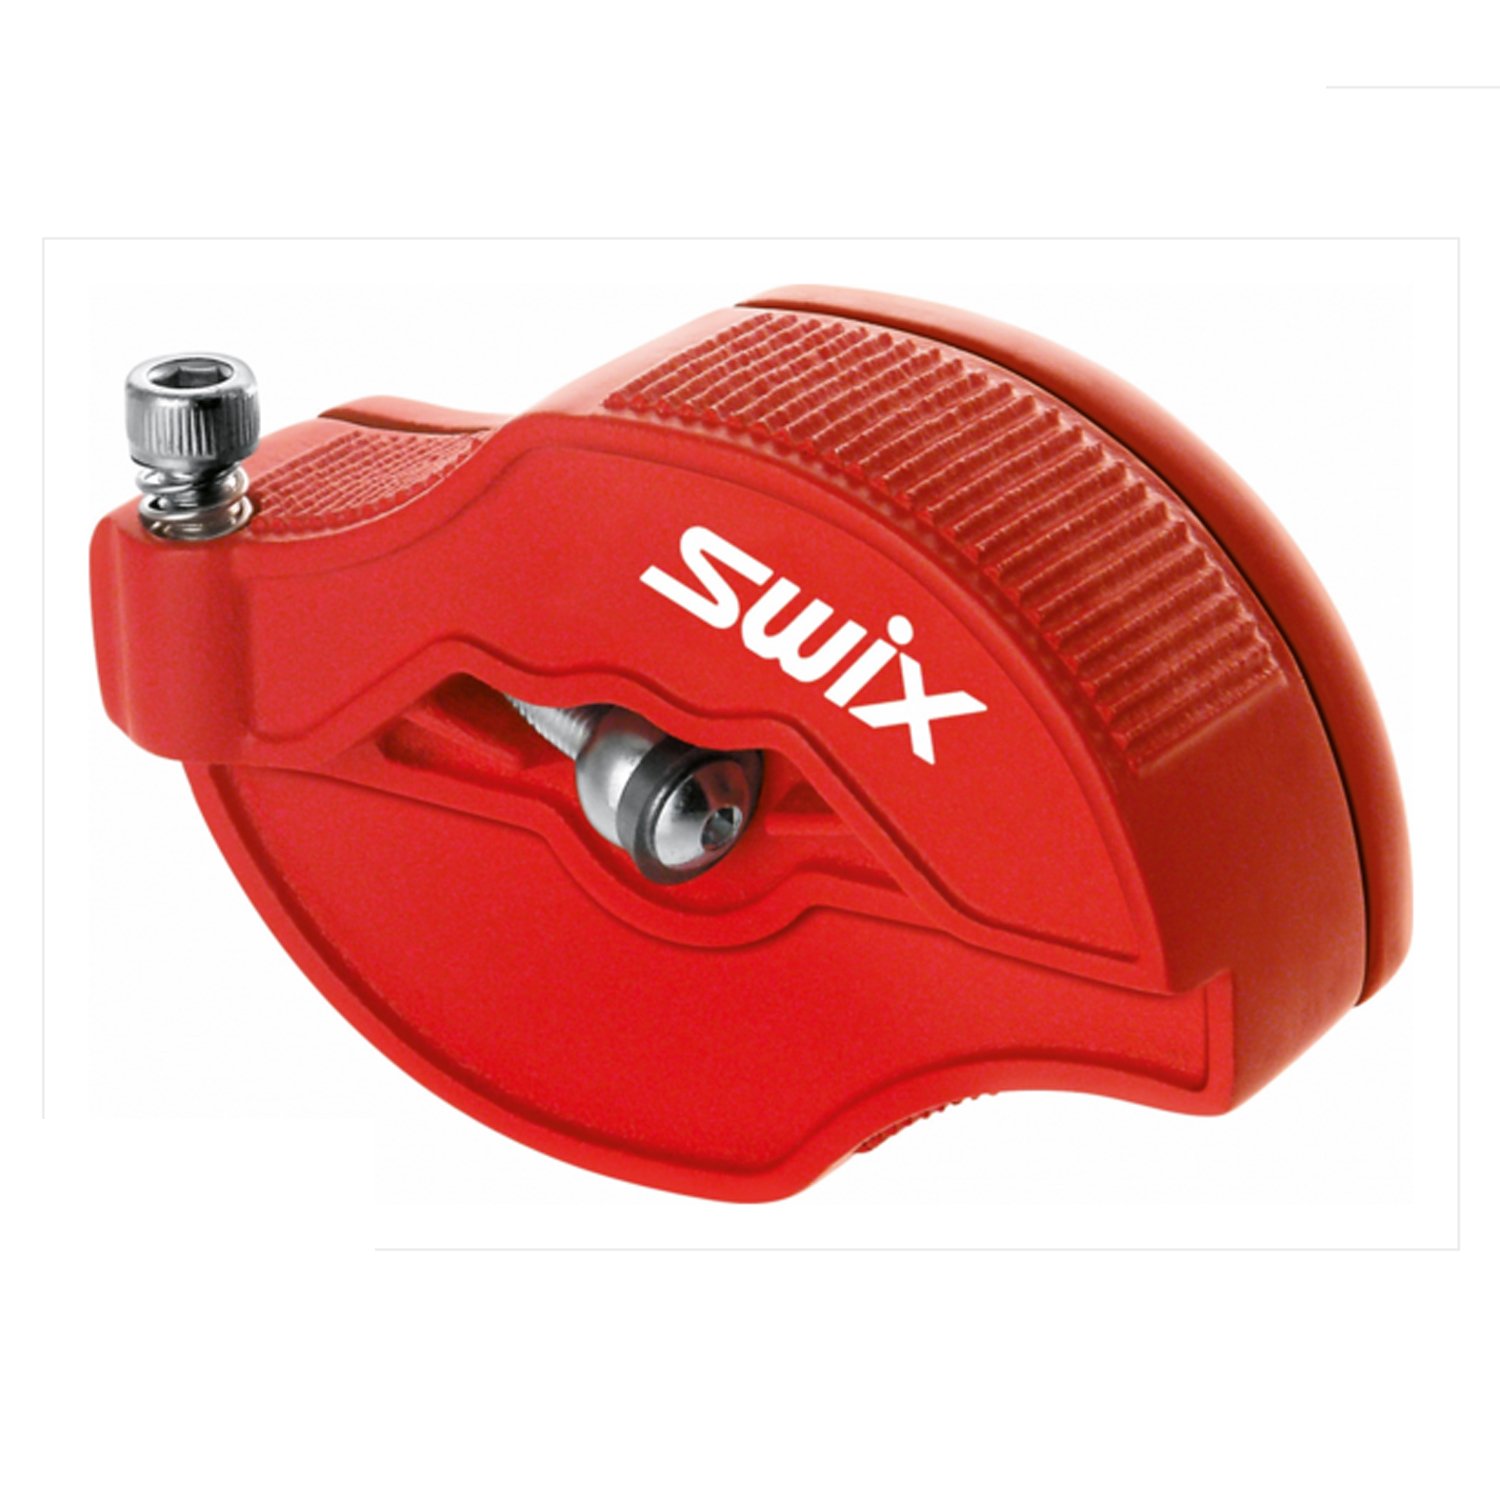 Swix Sidewall Cutter